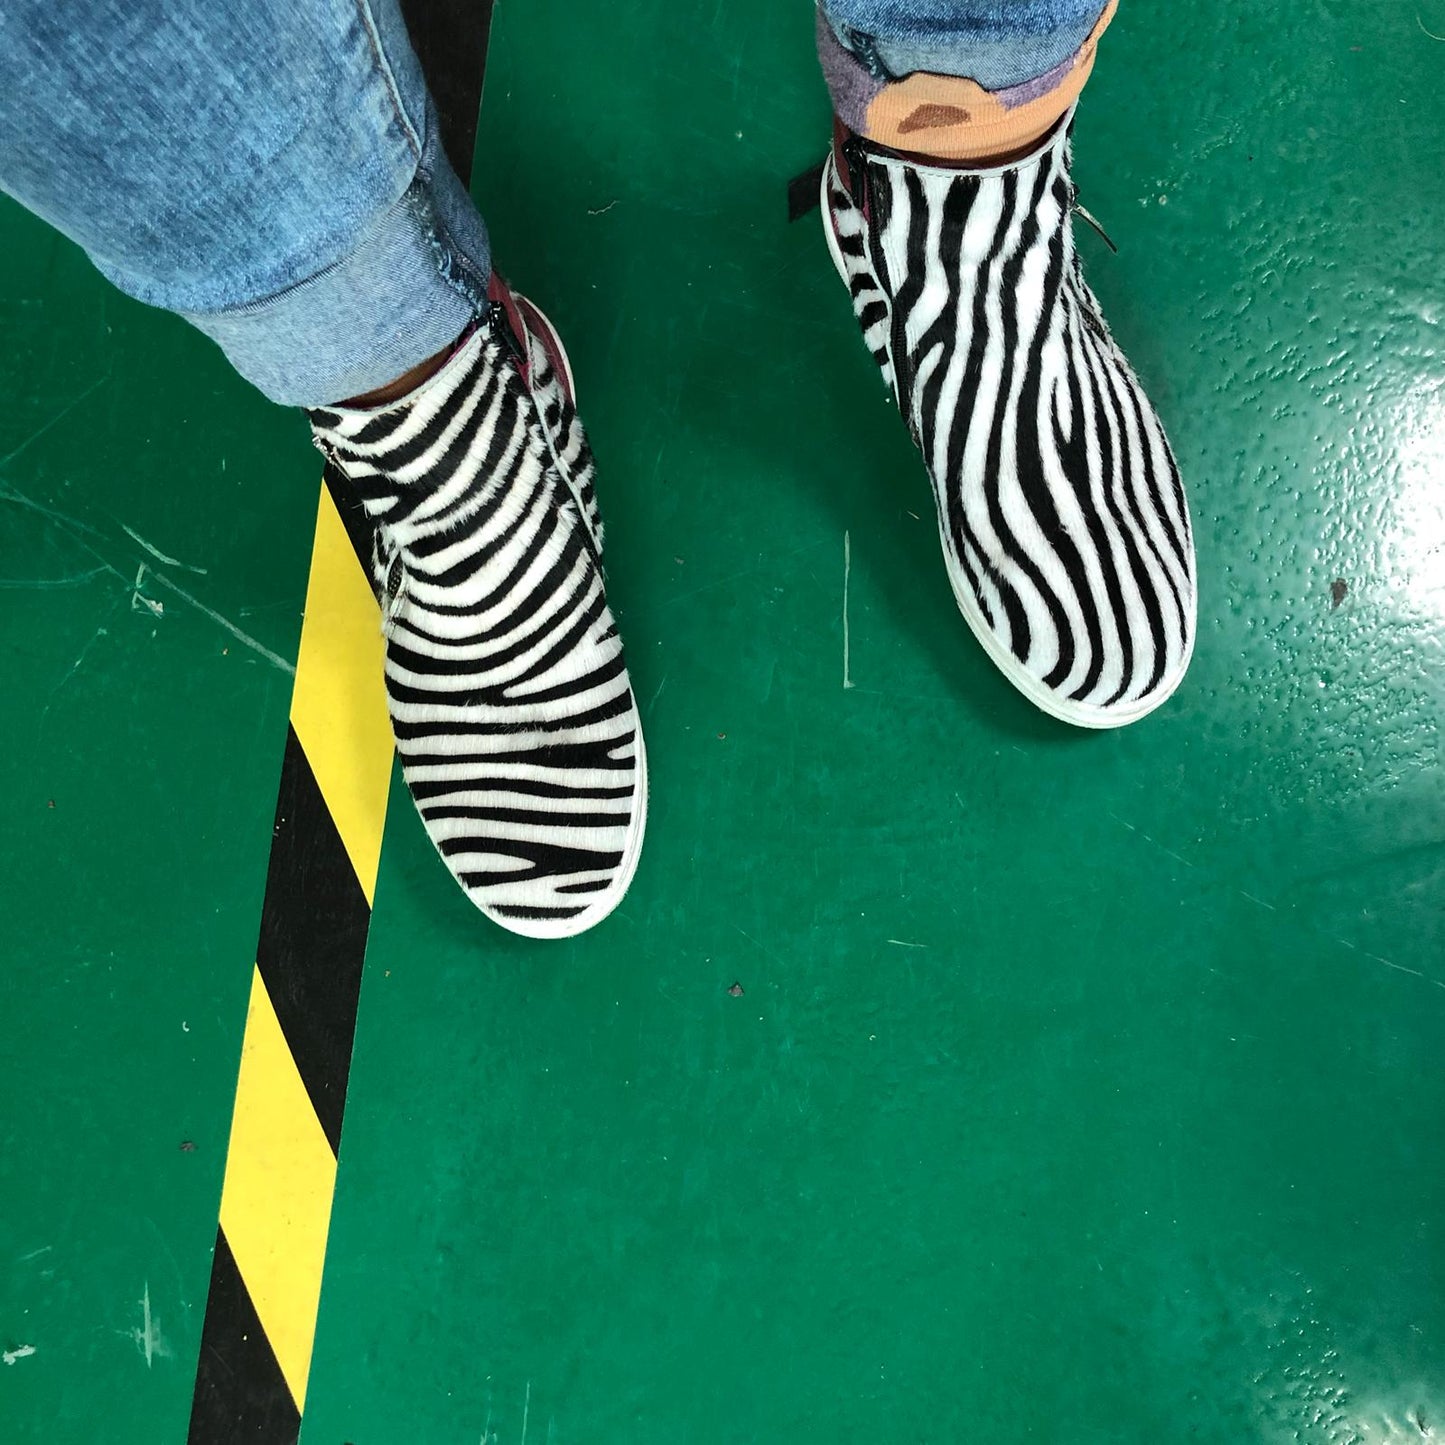 Chat - Zebra/Fuchsia sneaker boot- Last pair 36